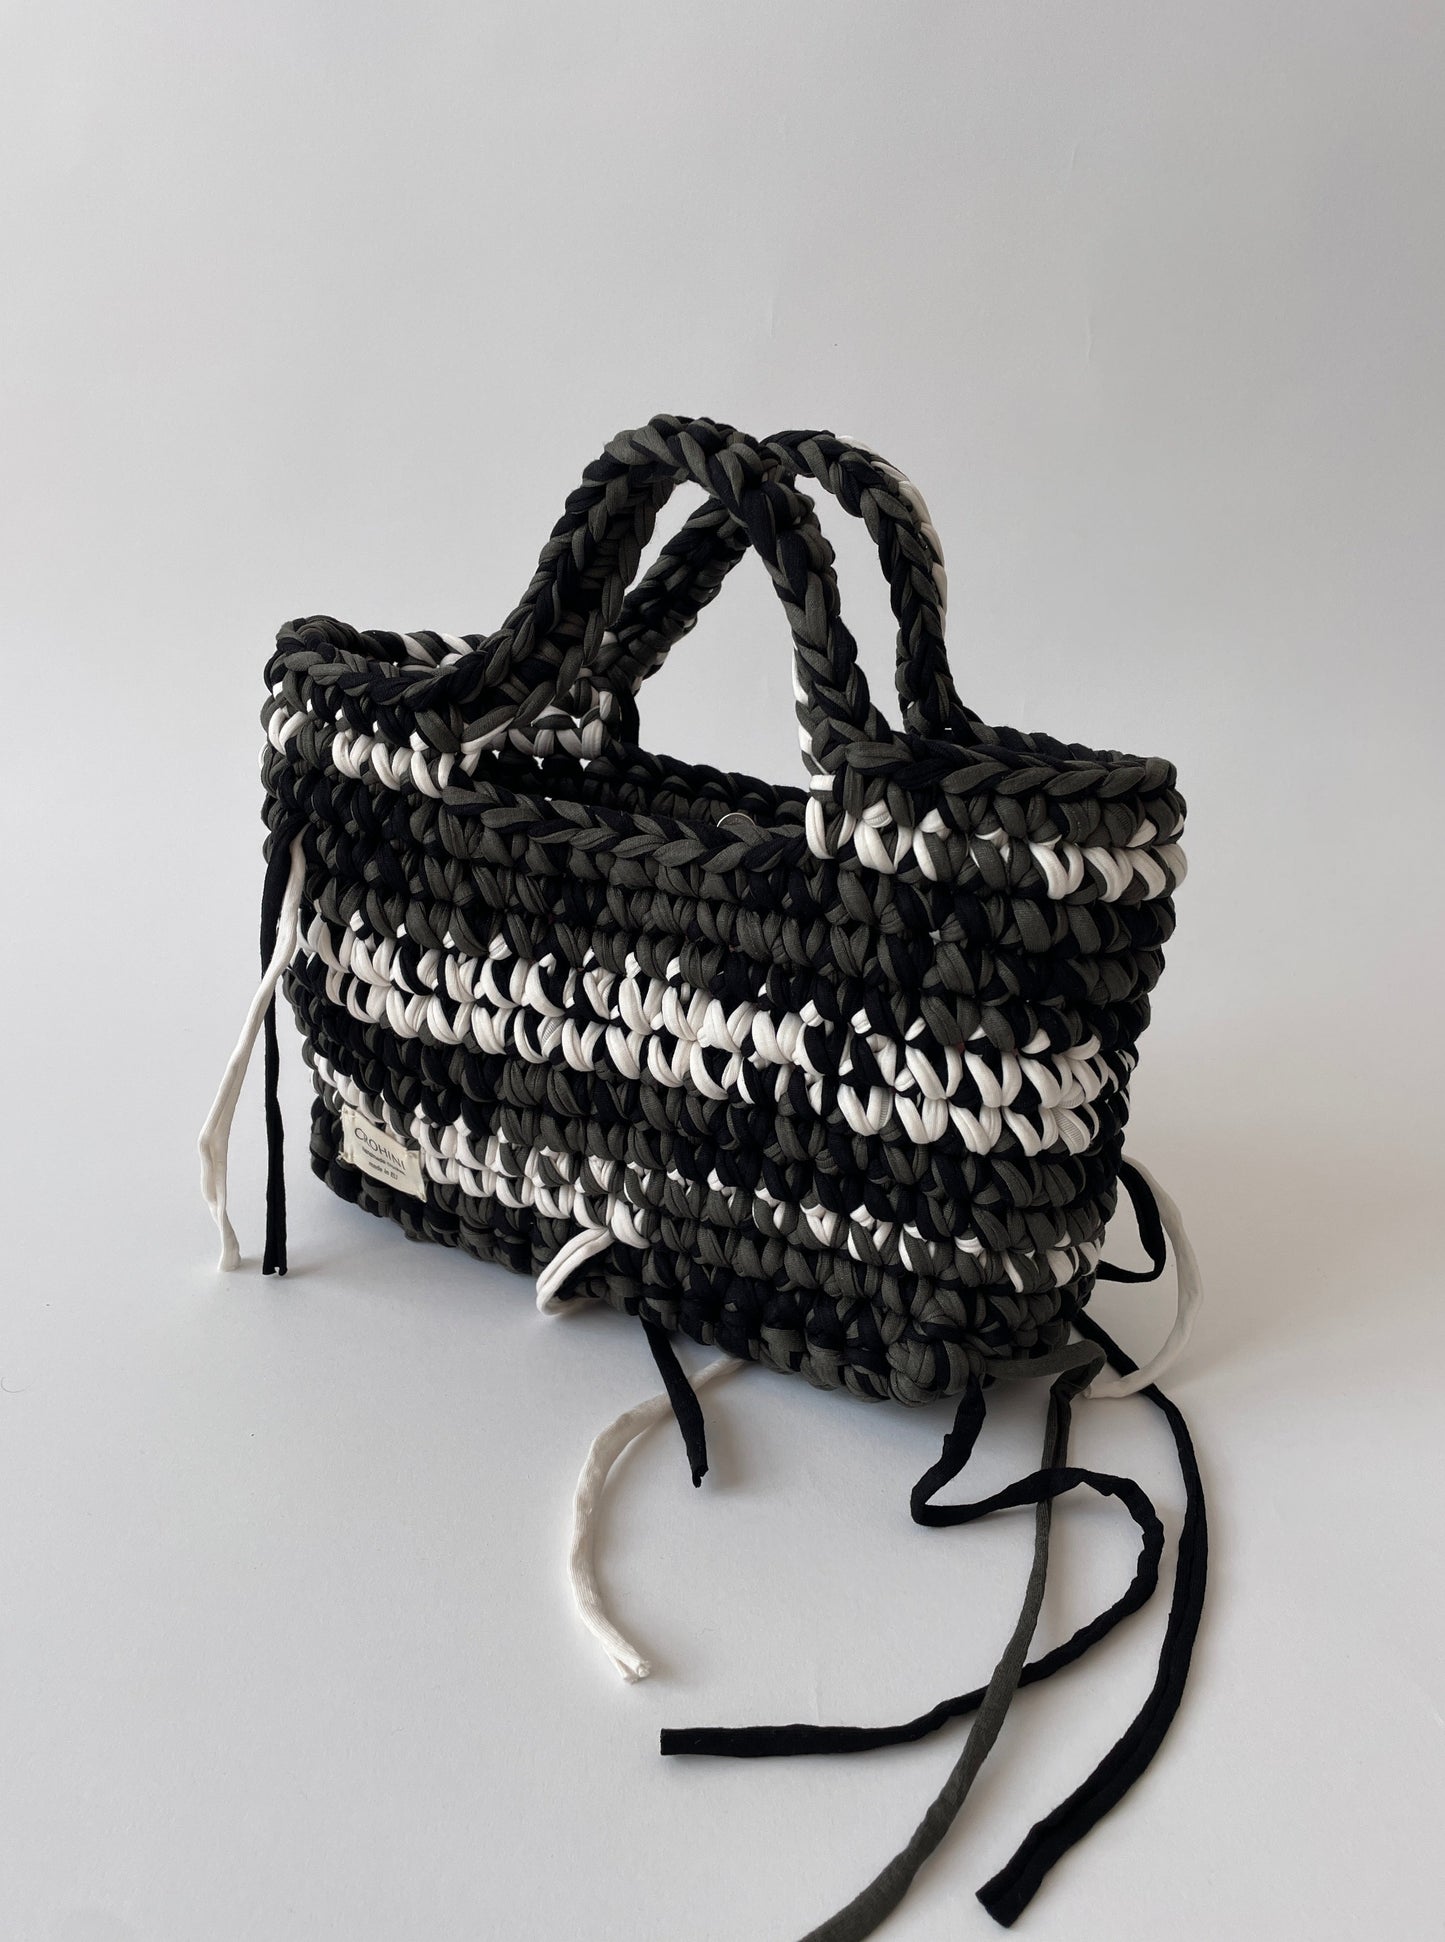 Olive Green and Black DIANA Crochet Bag - Medium